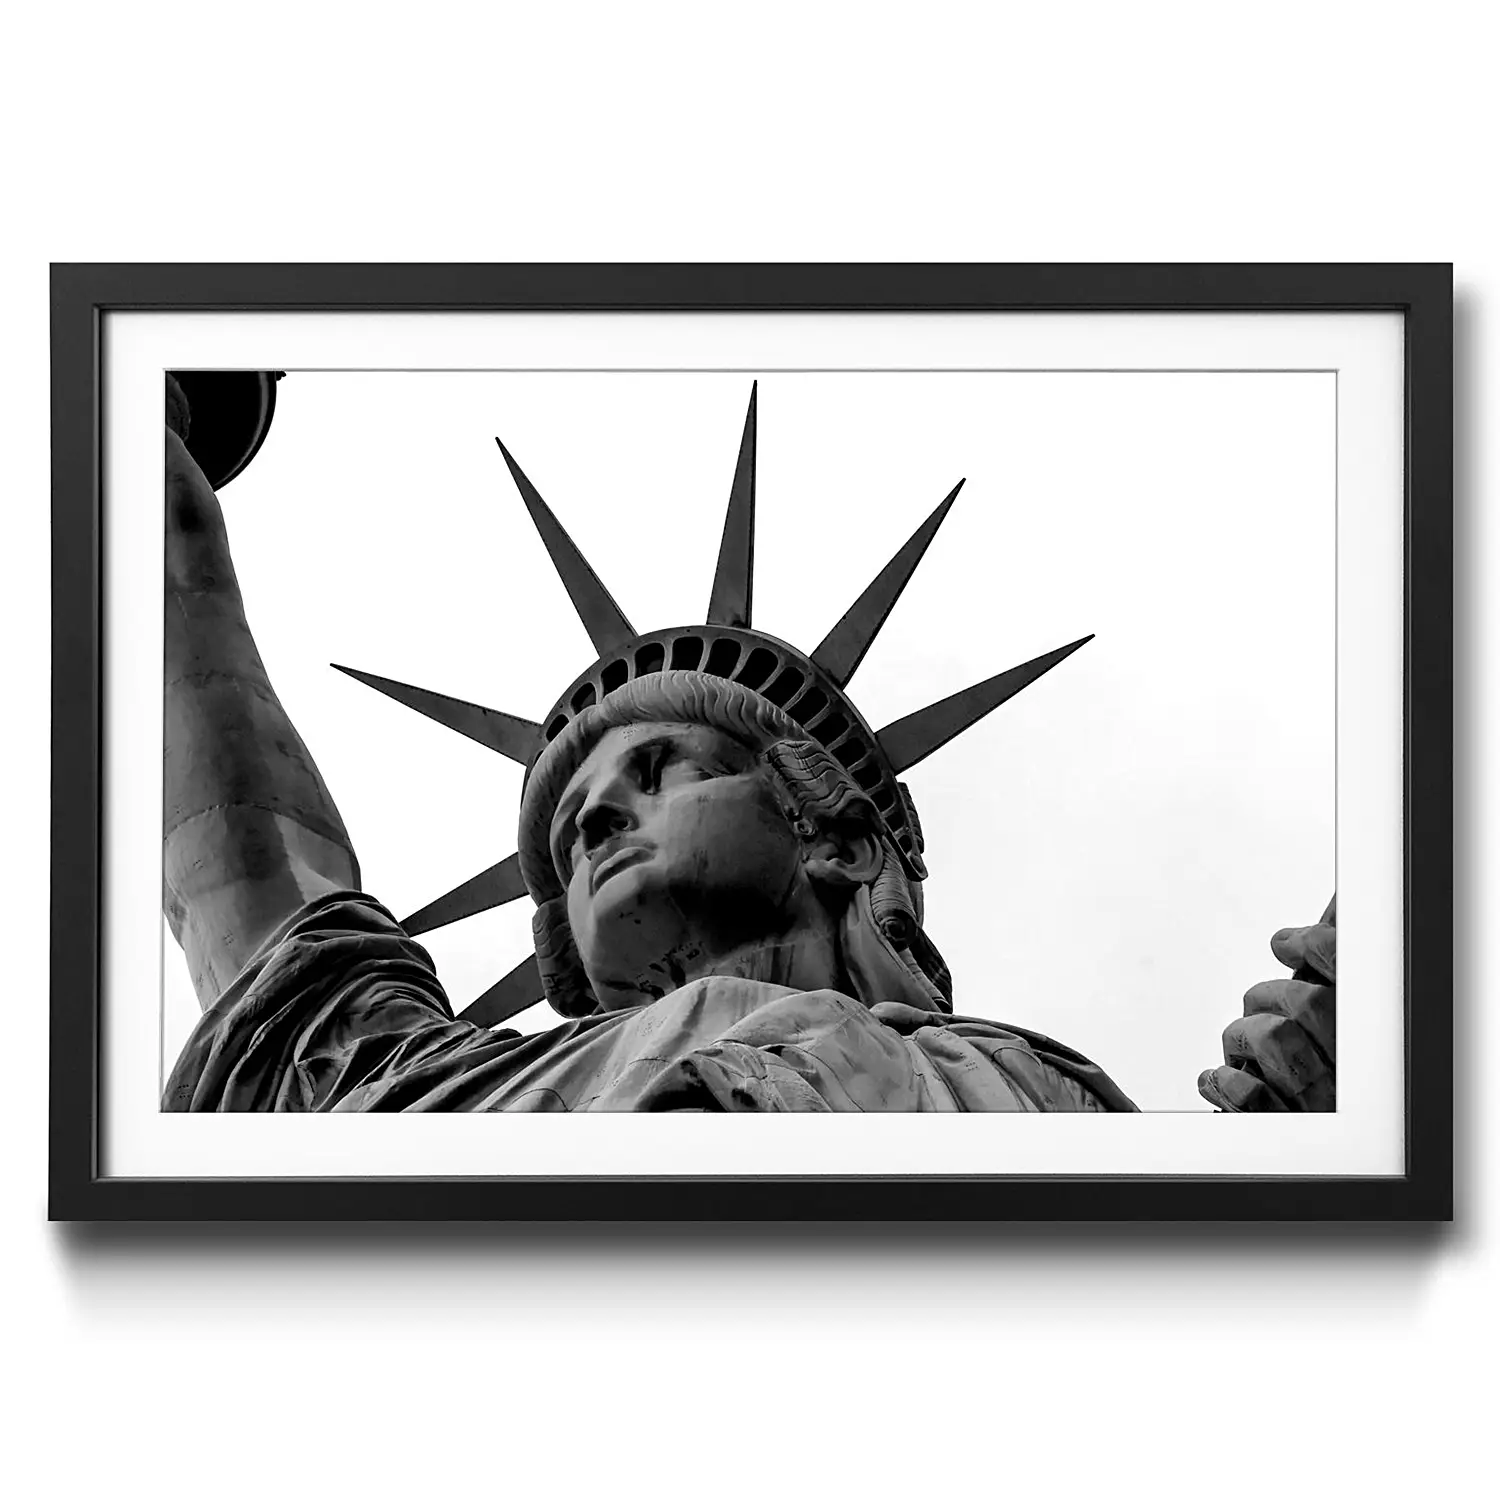 Gerahmtes Bild of Statue Liberty